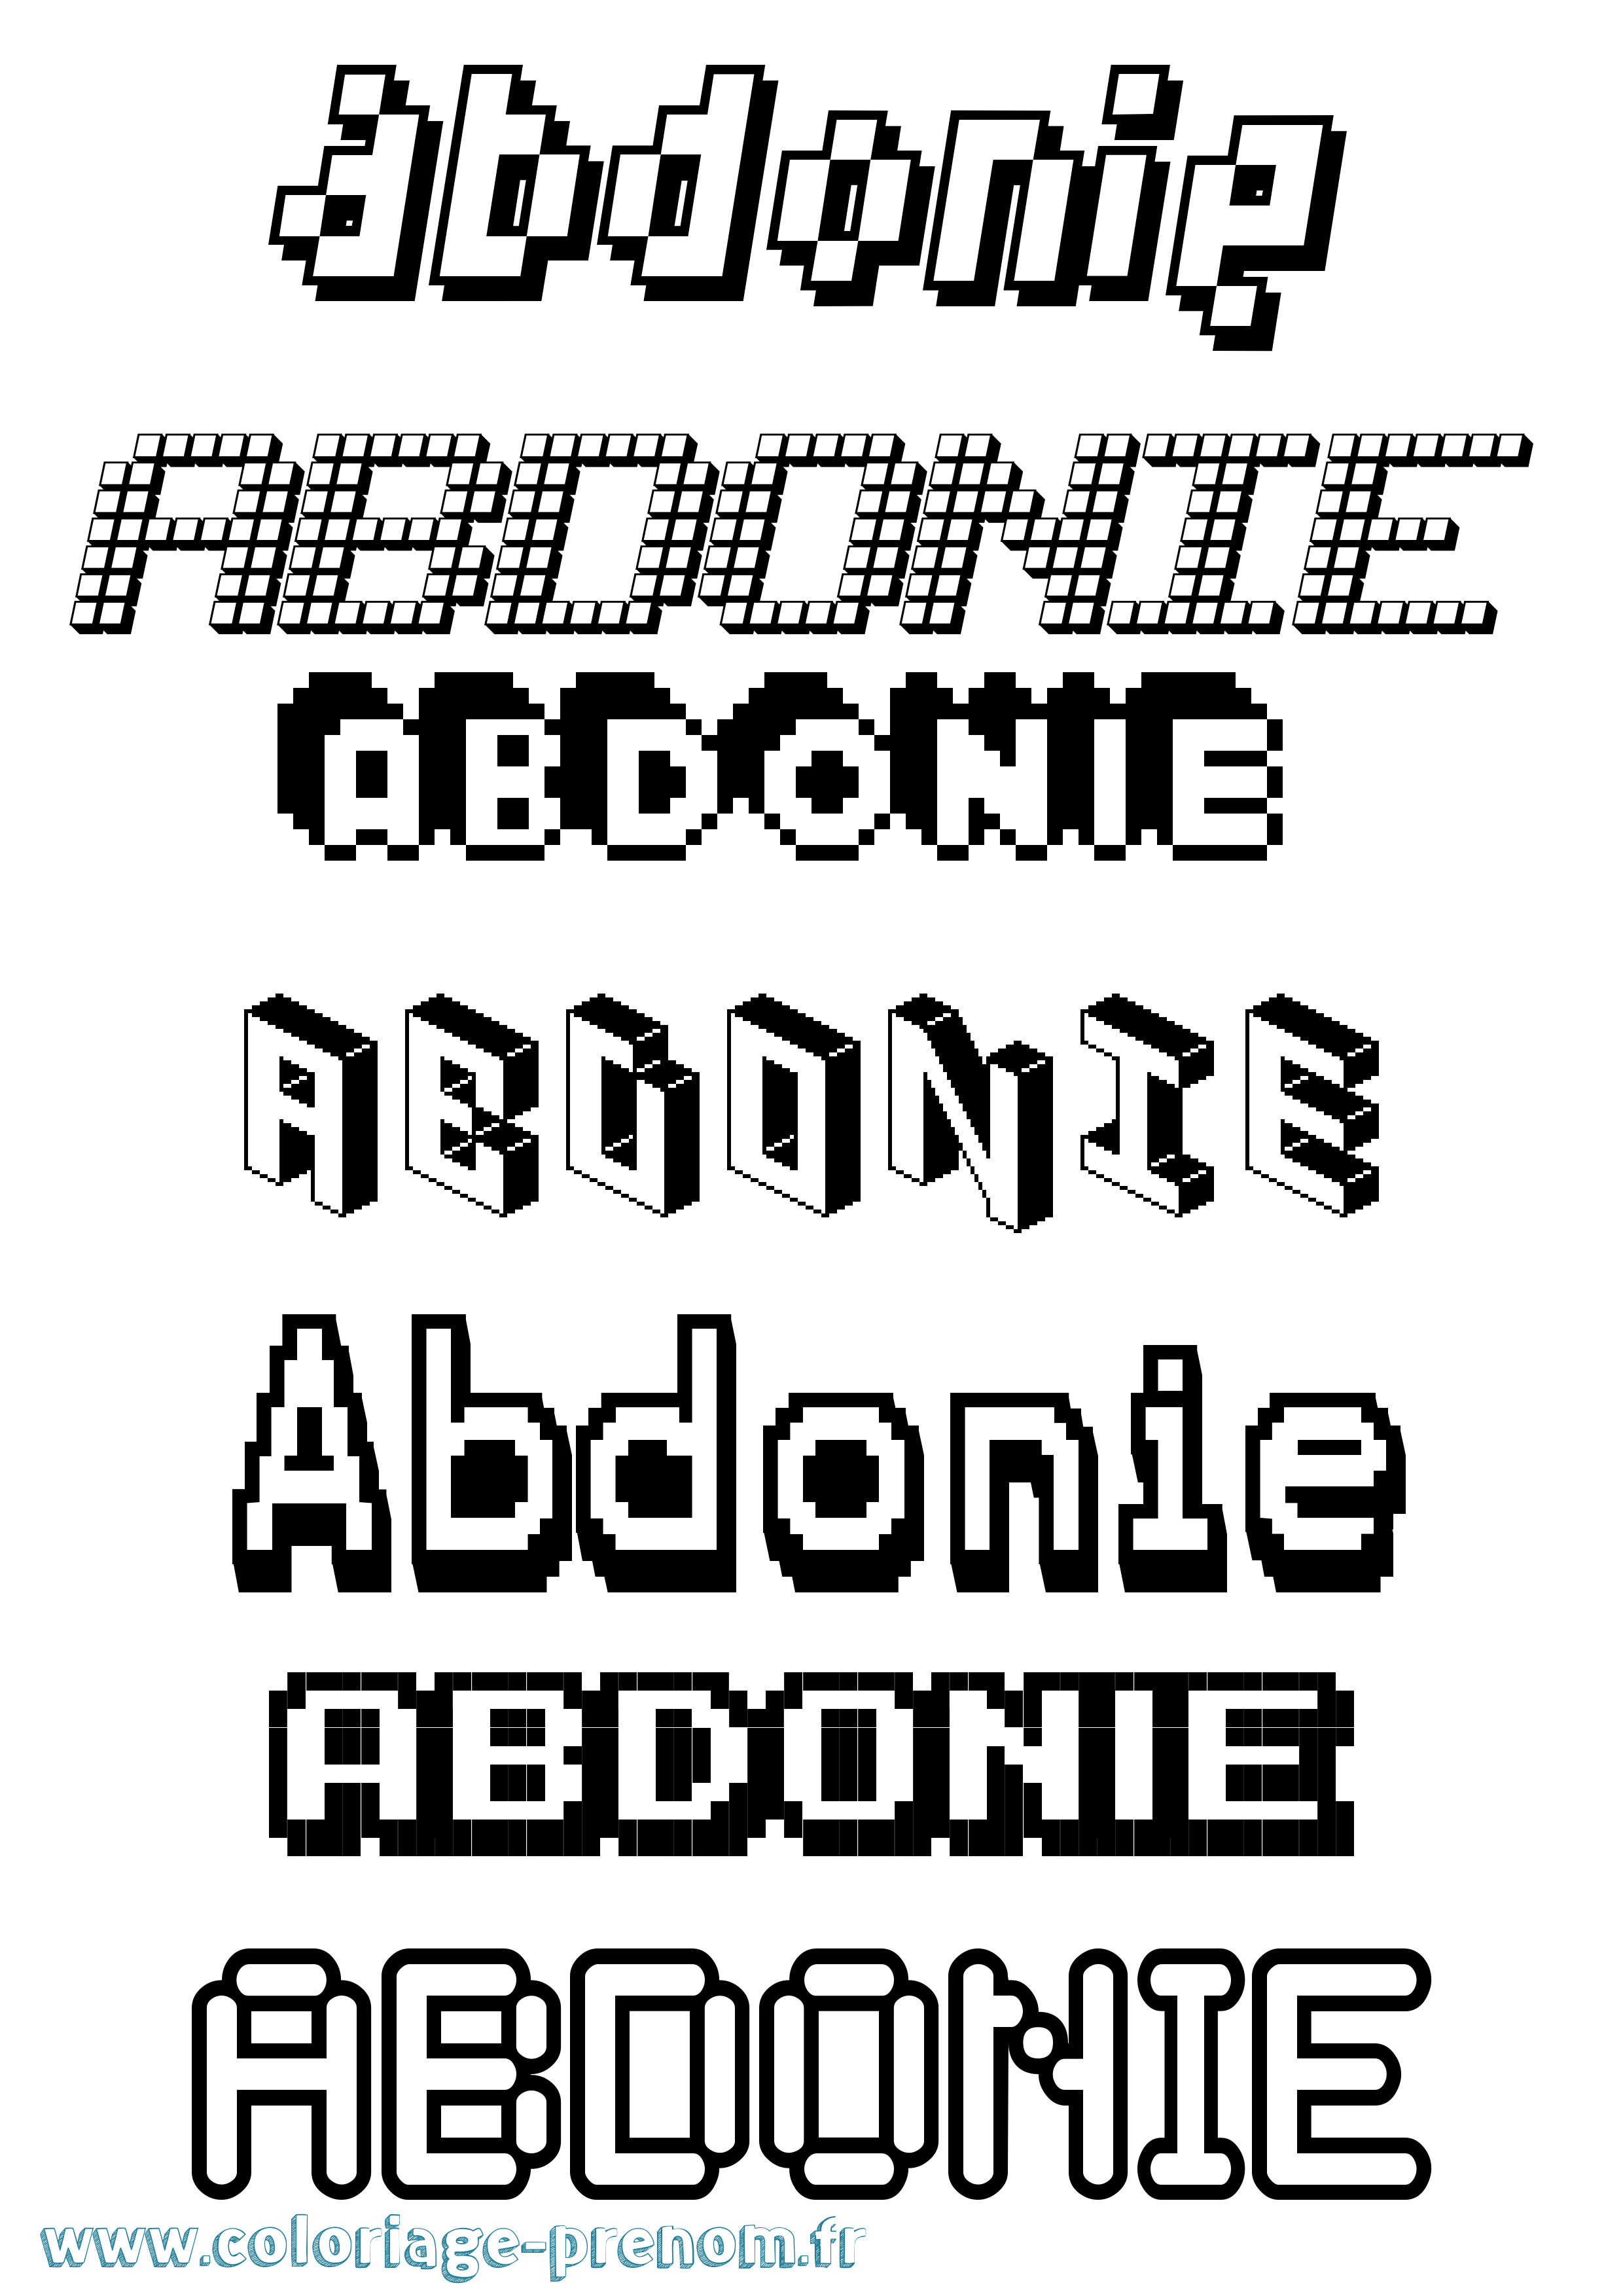 Coloriage prénom Abdonie Pixel